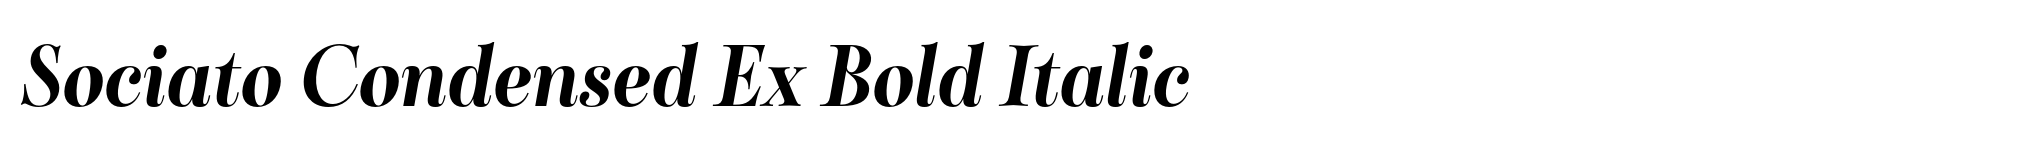 Sociato Condensed Ex Bold Italic image